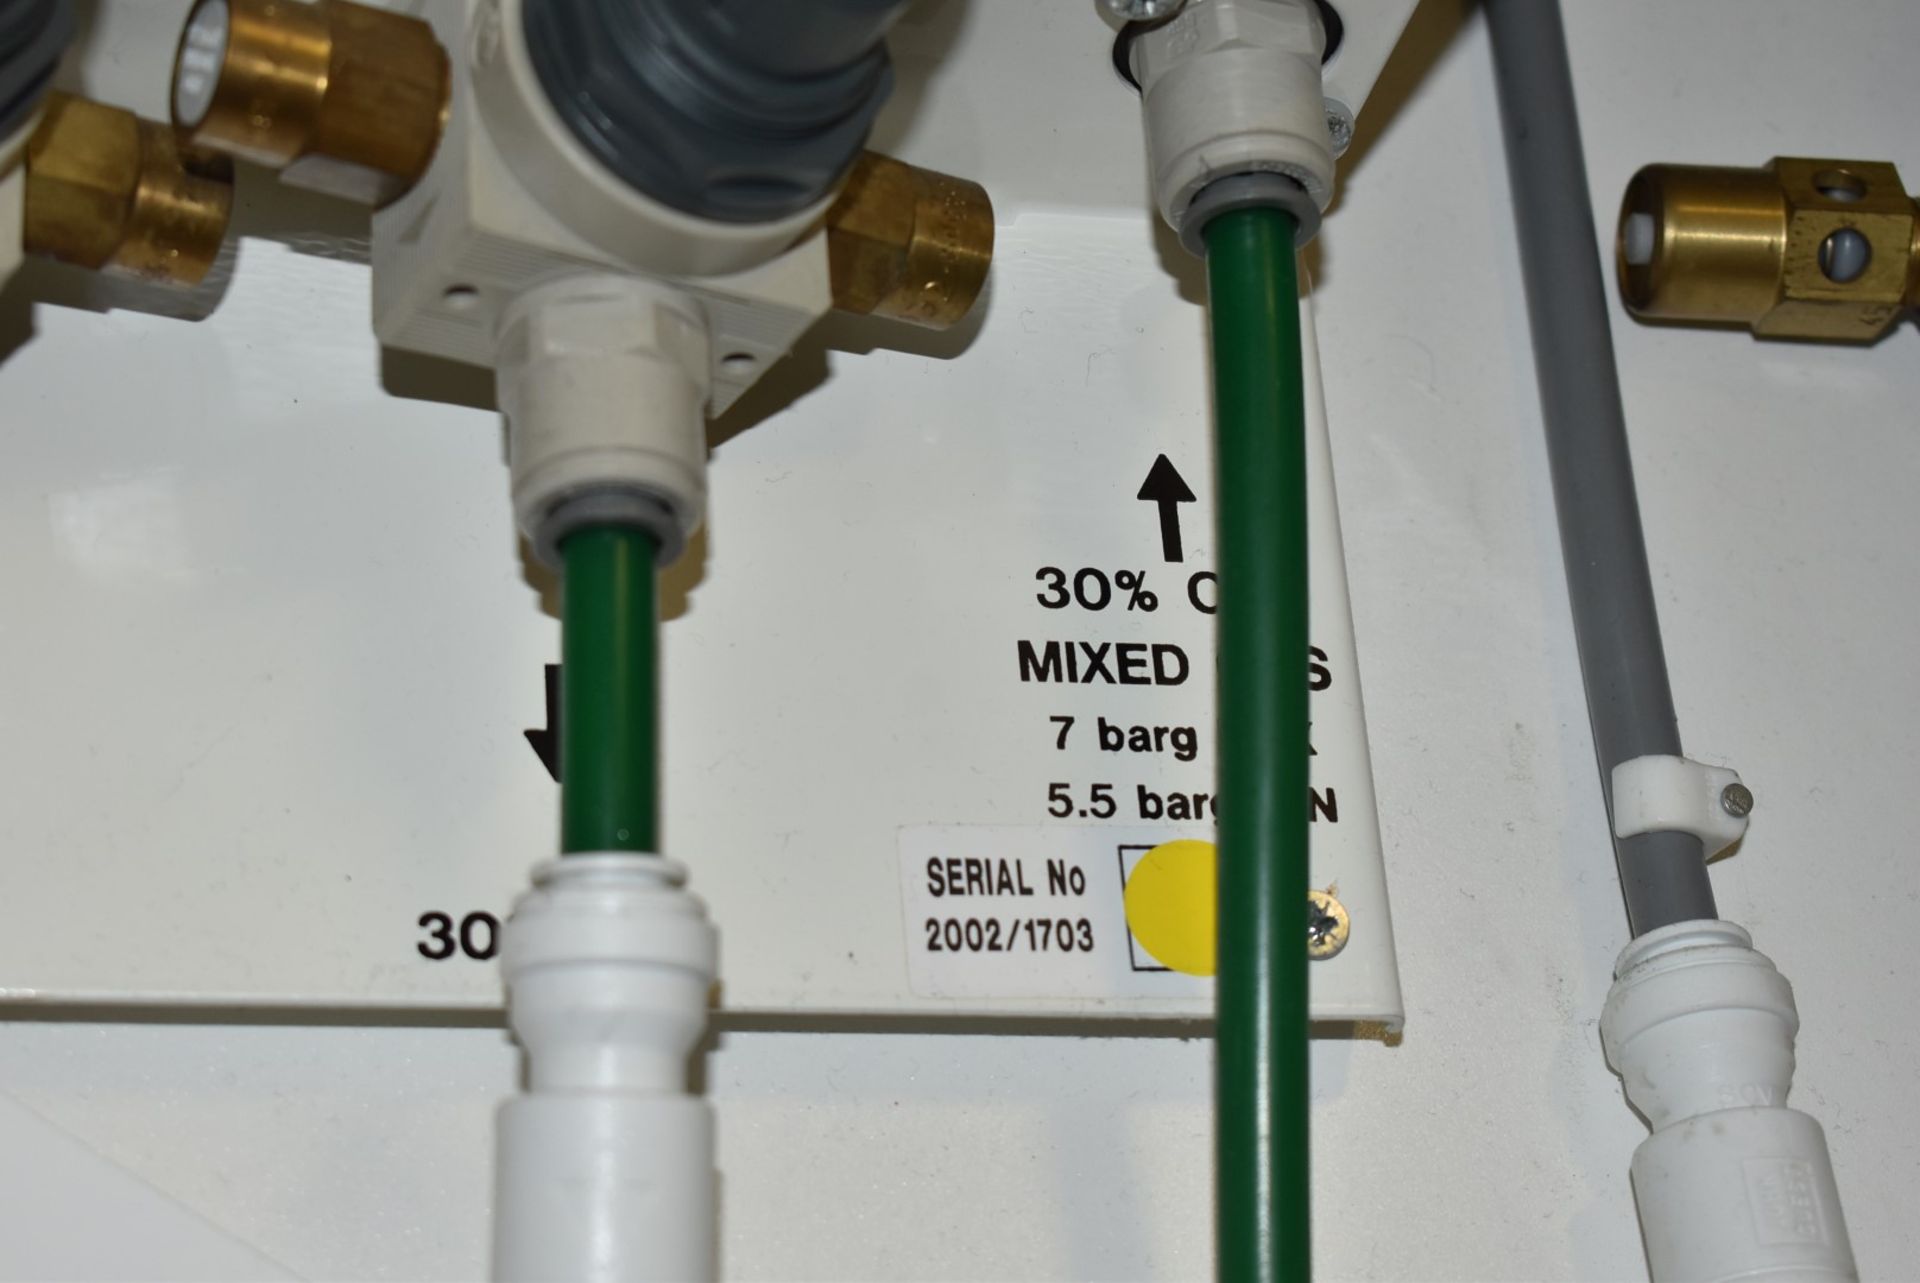 1 x Hubbard Wine or Beer Celler Cooling Unit, Beer Pumps, Coca Cola Bulk Supply, Keg Connectors - Image 16 of 20